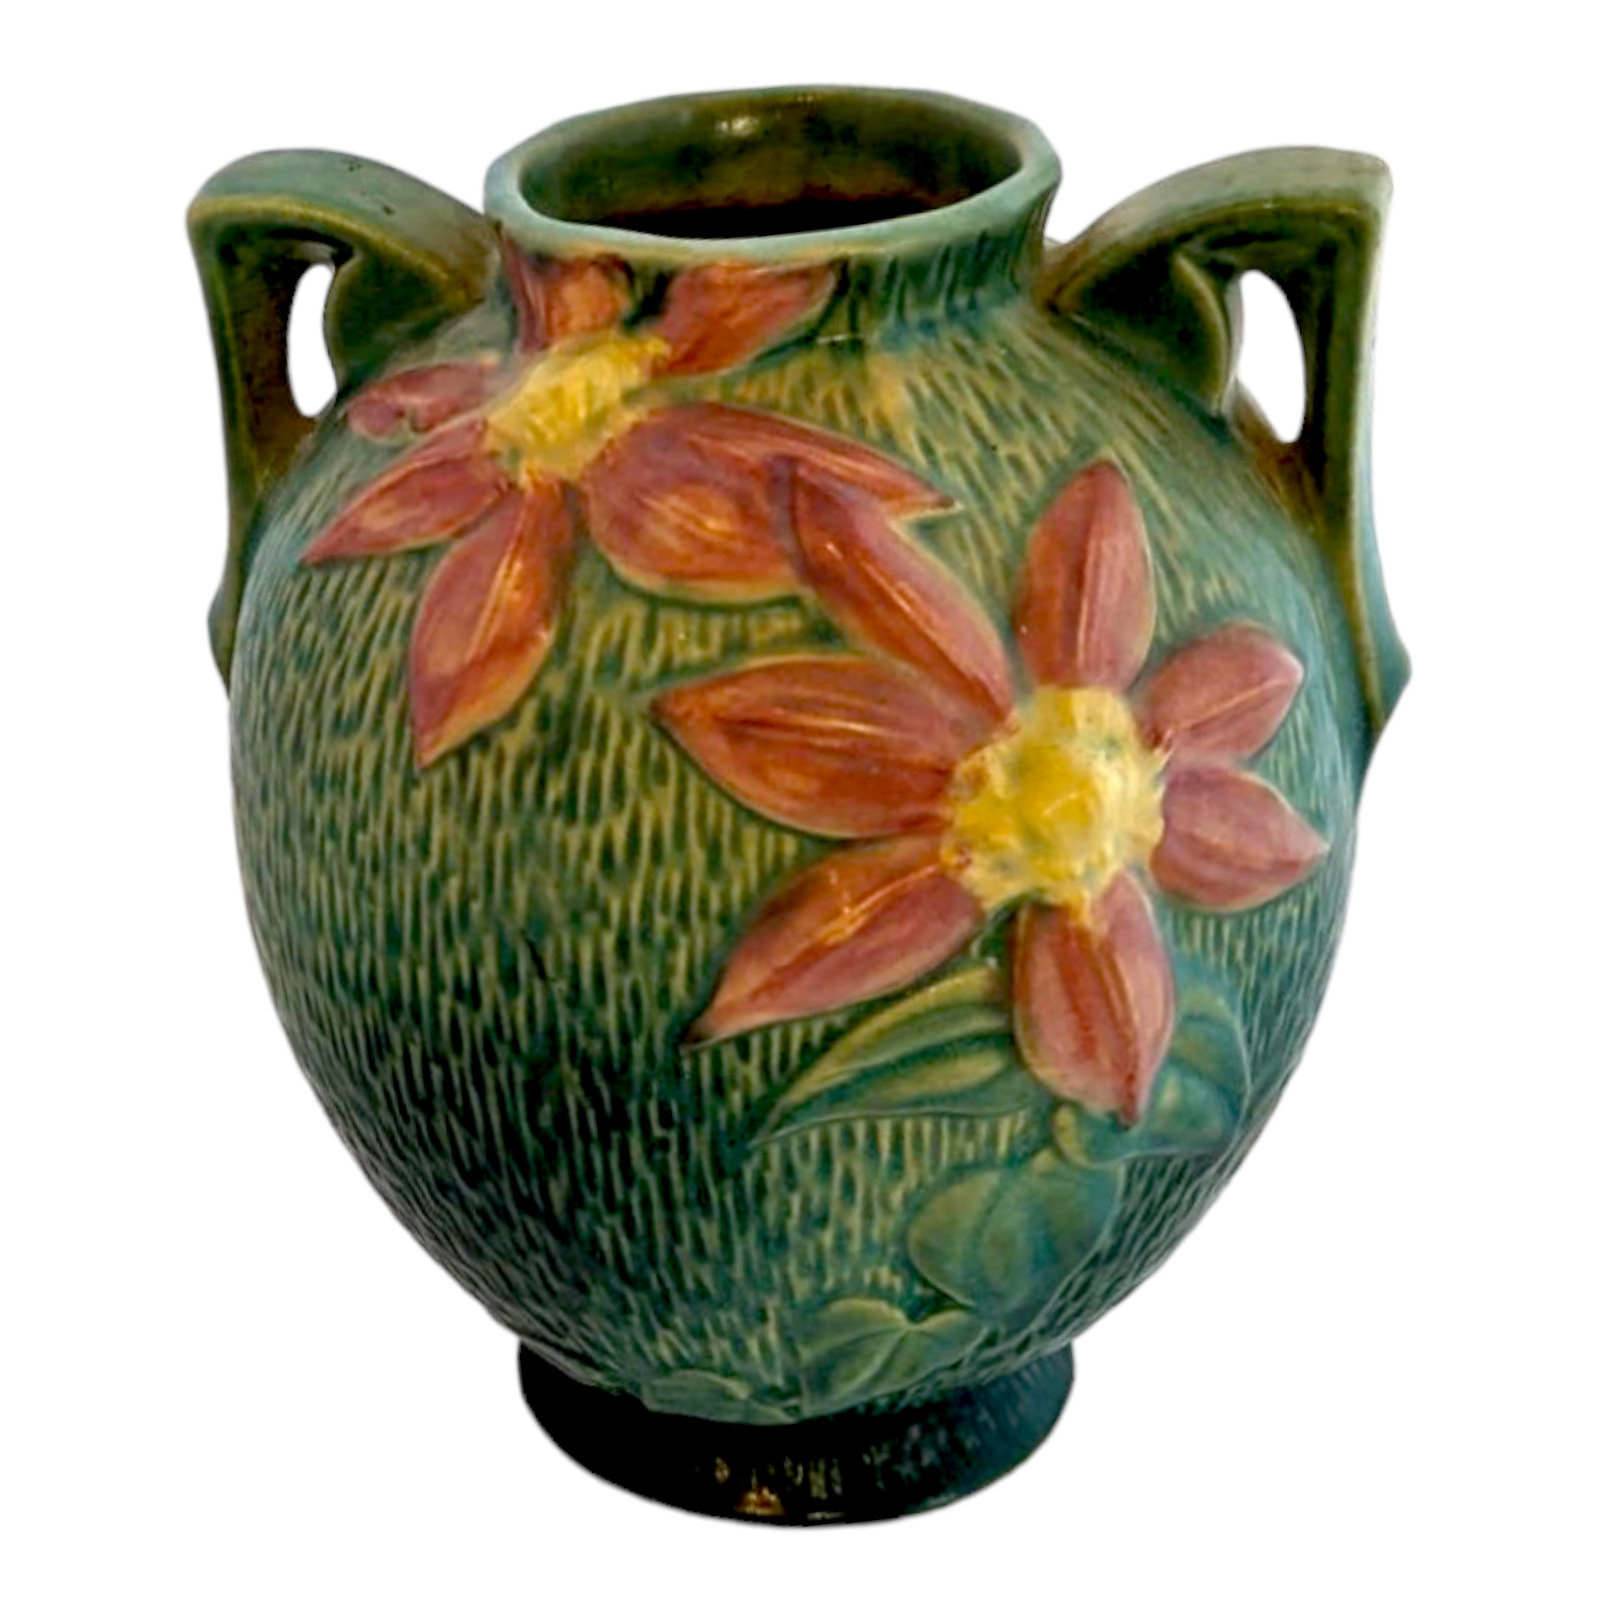 Roseville Clematis Green Vase 107-8 Double Handle Mark RJ 1940s Bulb Pink Floral